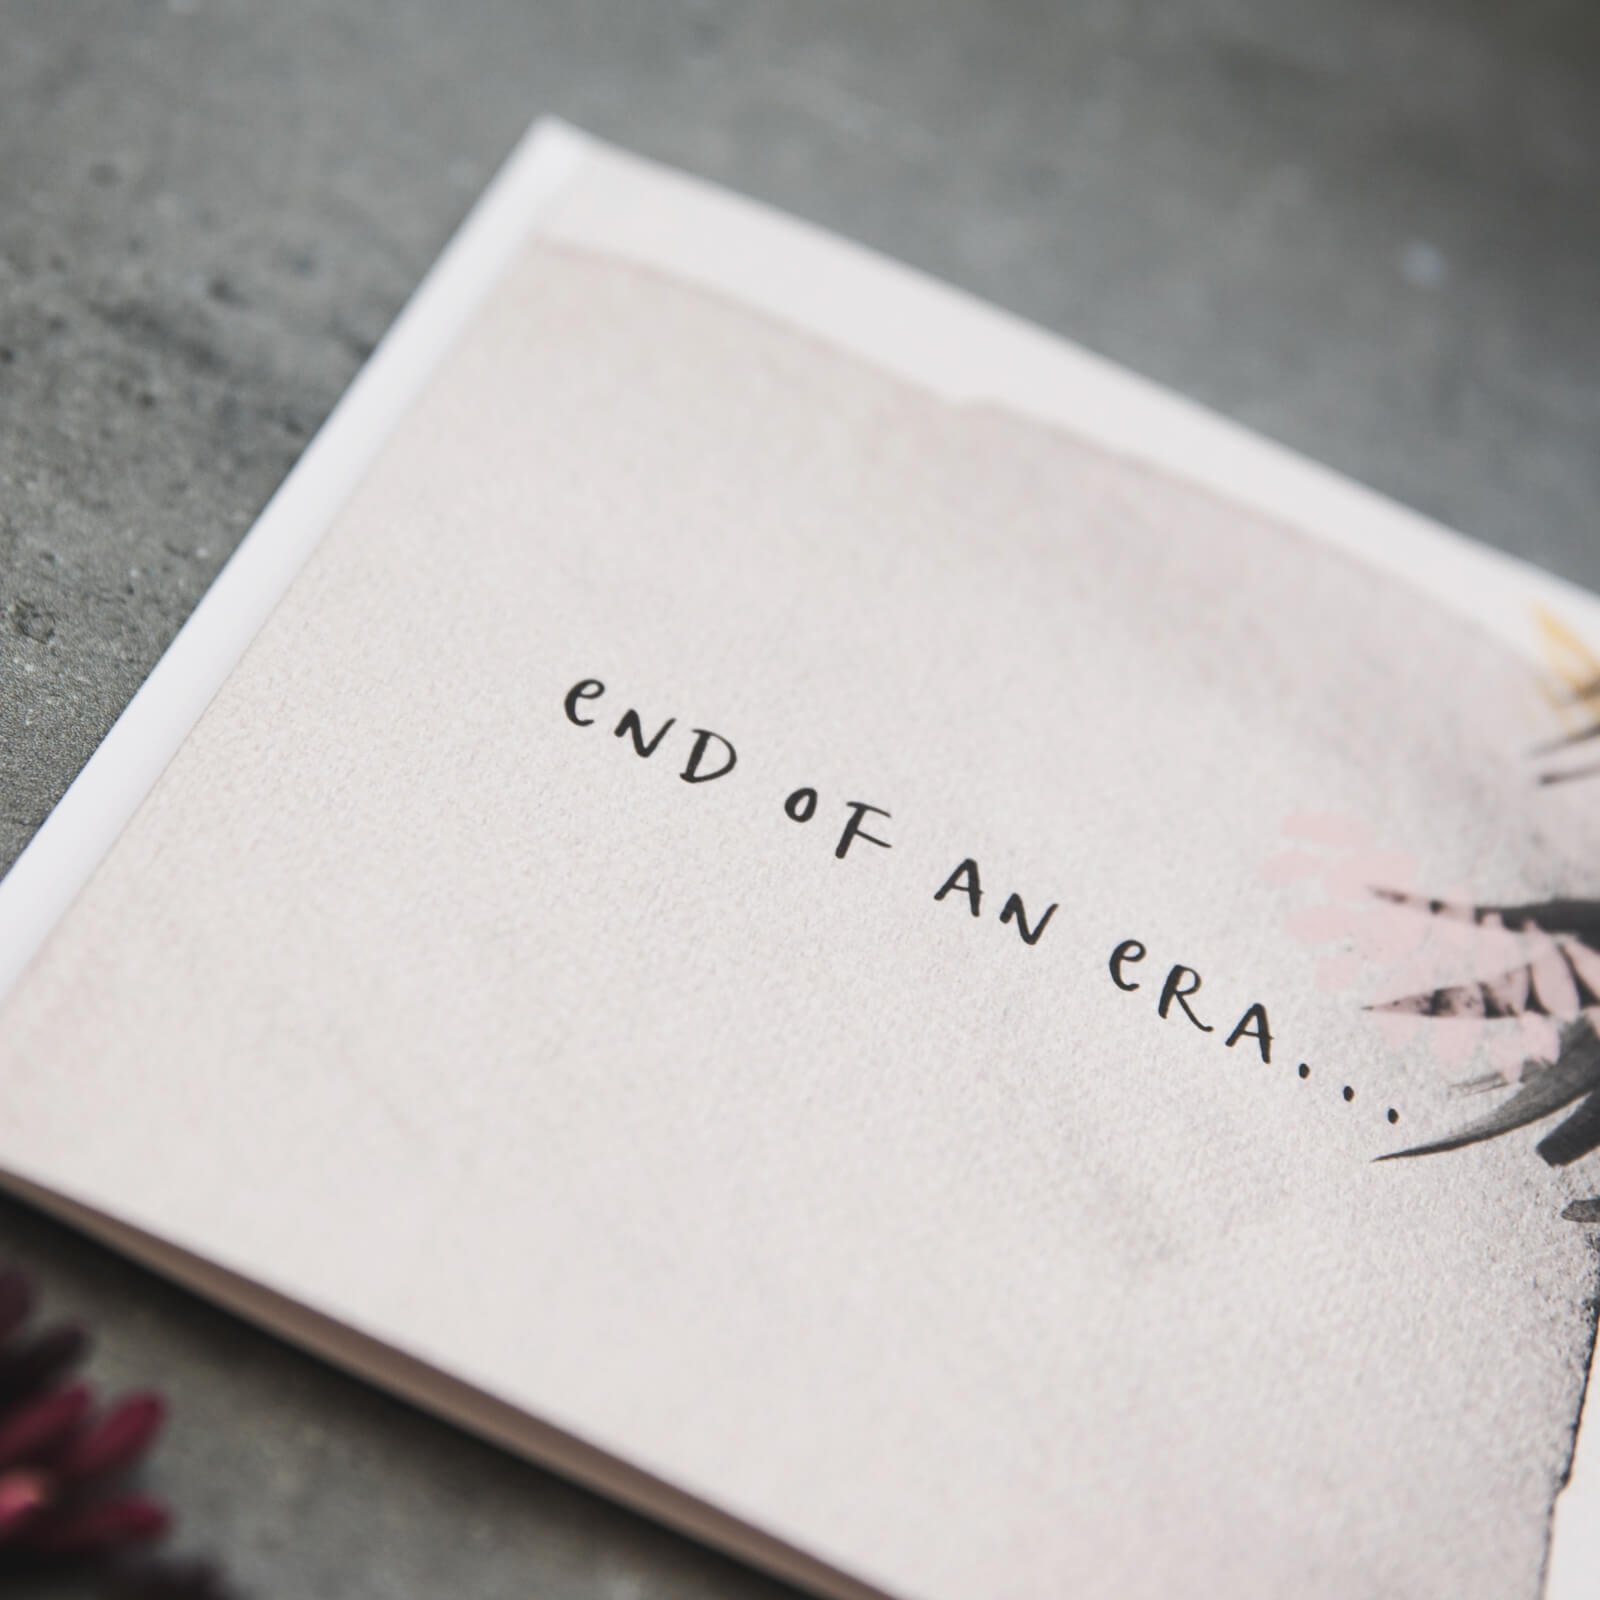 'End Of An Era' Leaving Card - I am Nat Ltd - Greeting Card